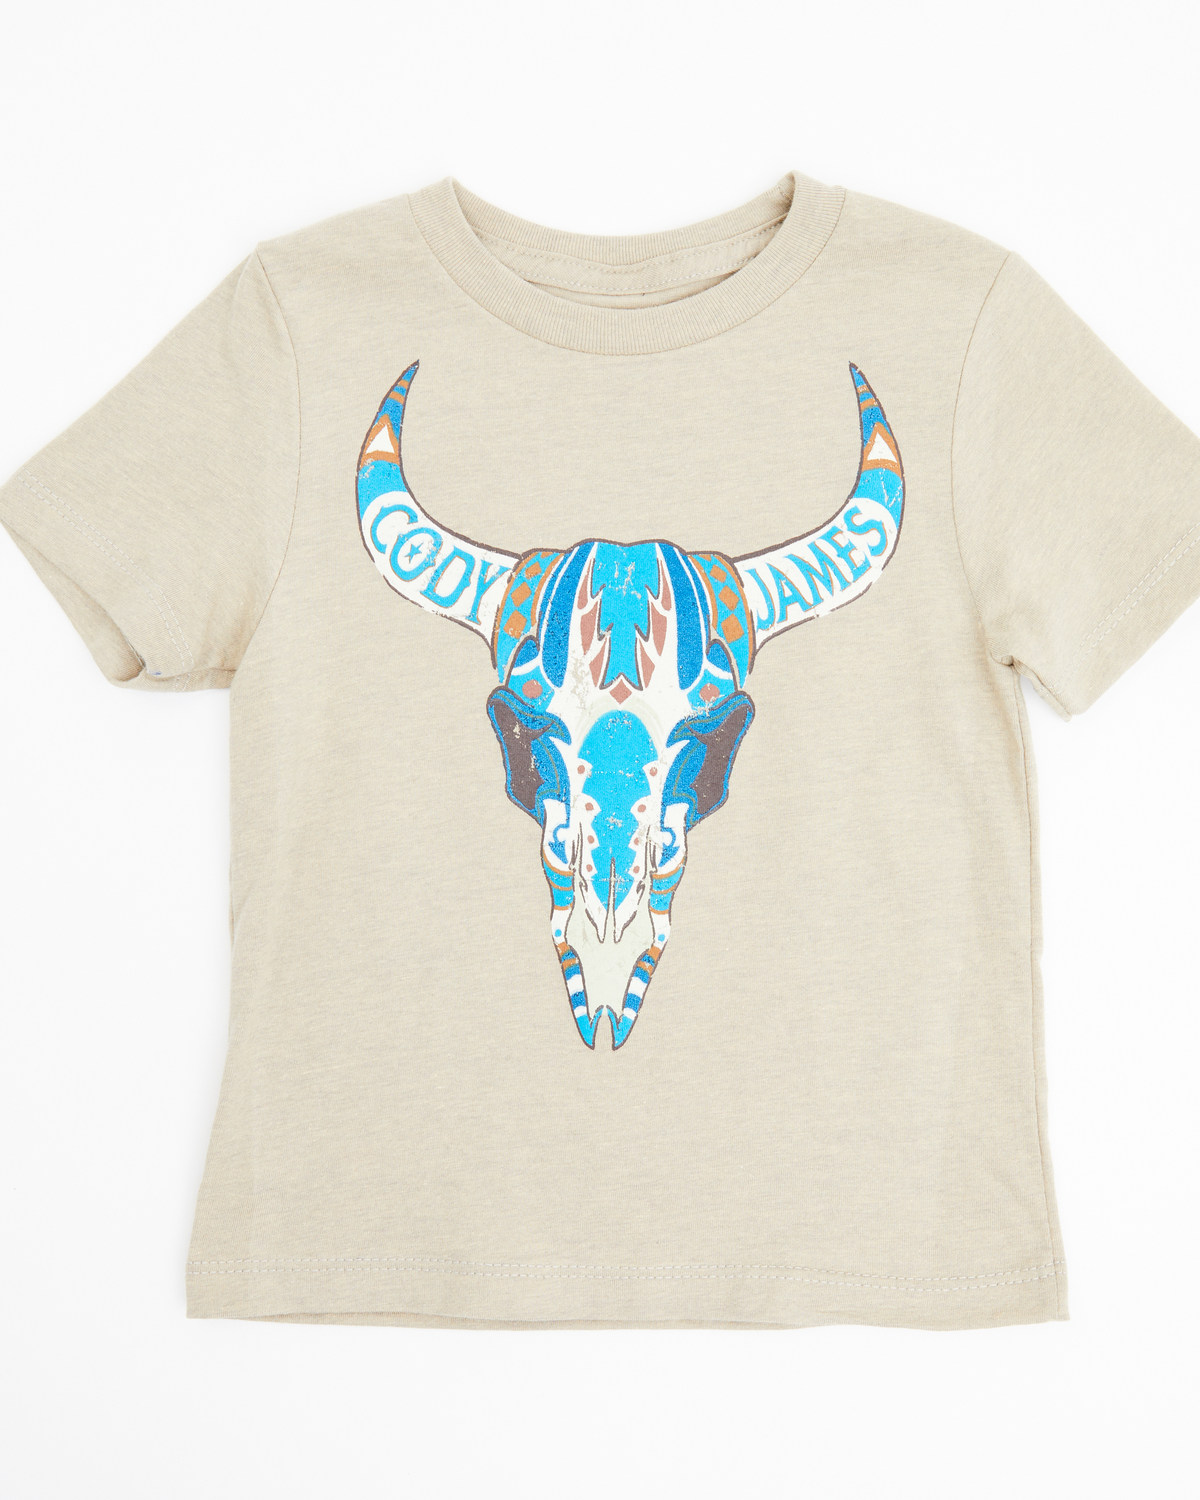 Cody James Toddler Boys' Reins Short Sleeve Graphic T-Shirt